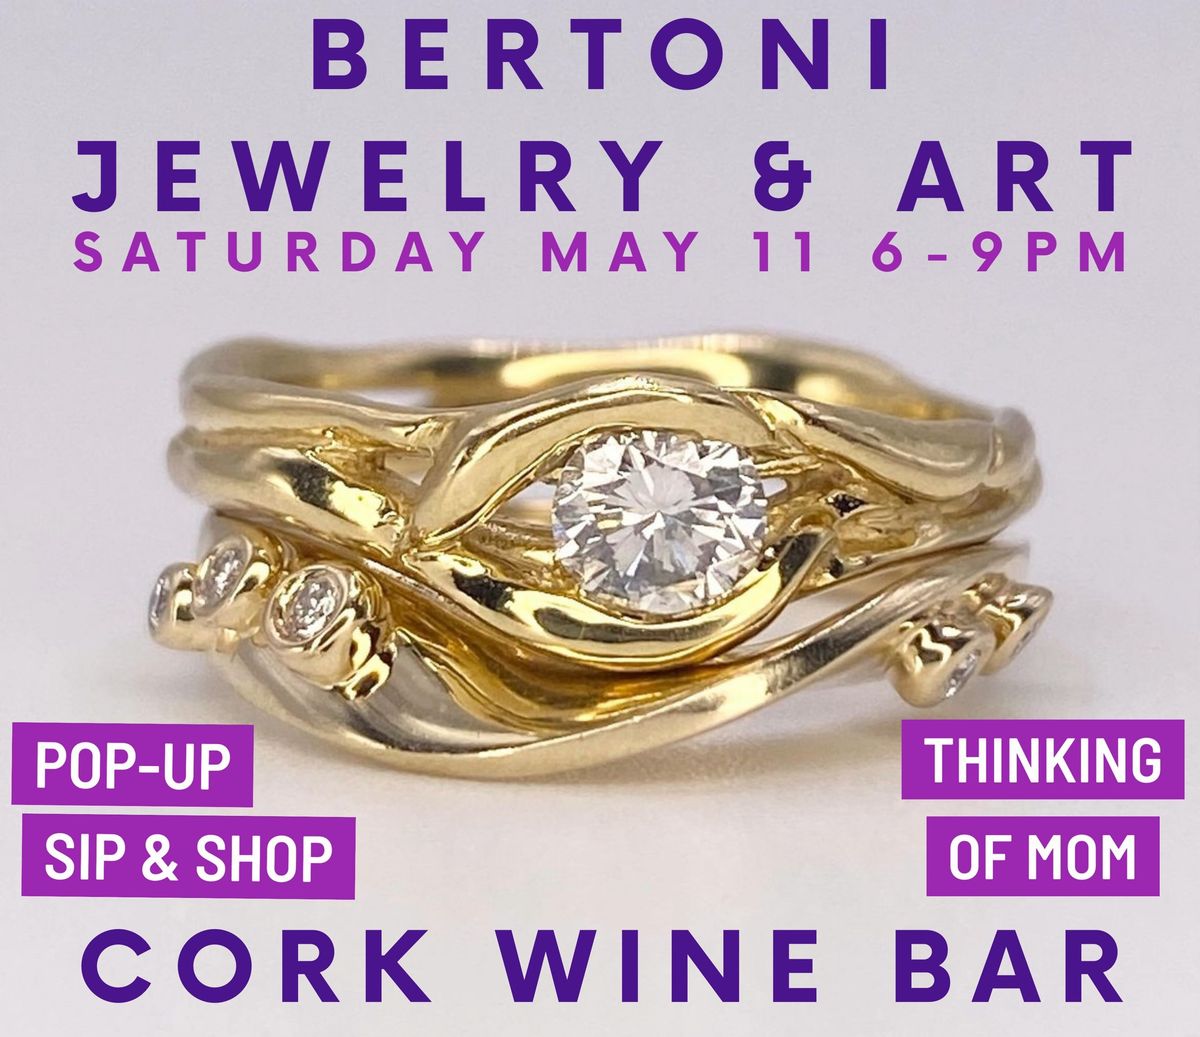 Bertoni Gallery’s Mother’s Day PopUp Shop & Sip at Cork Wine Bar